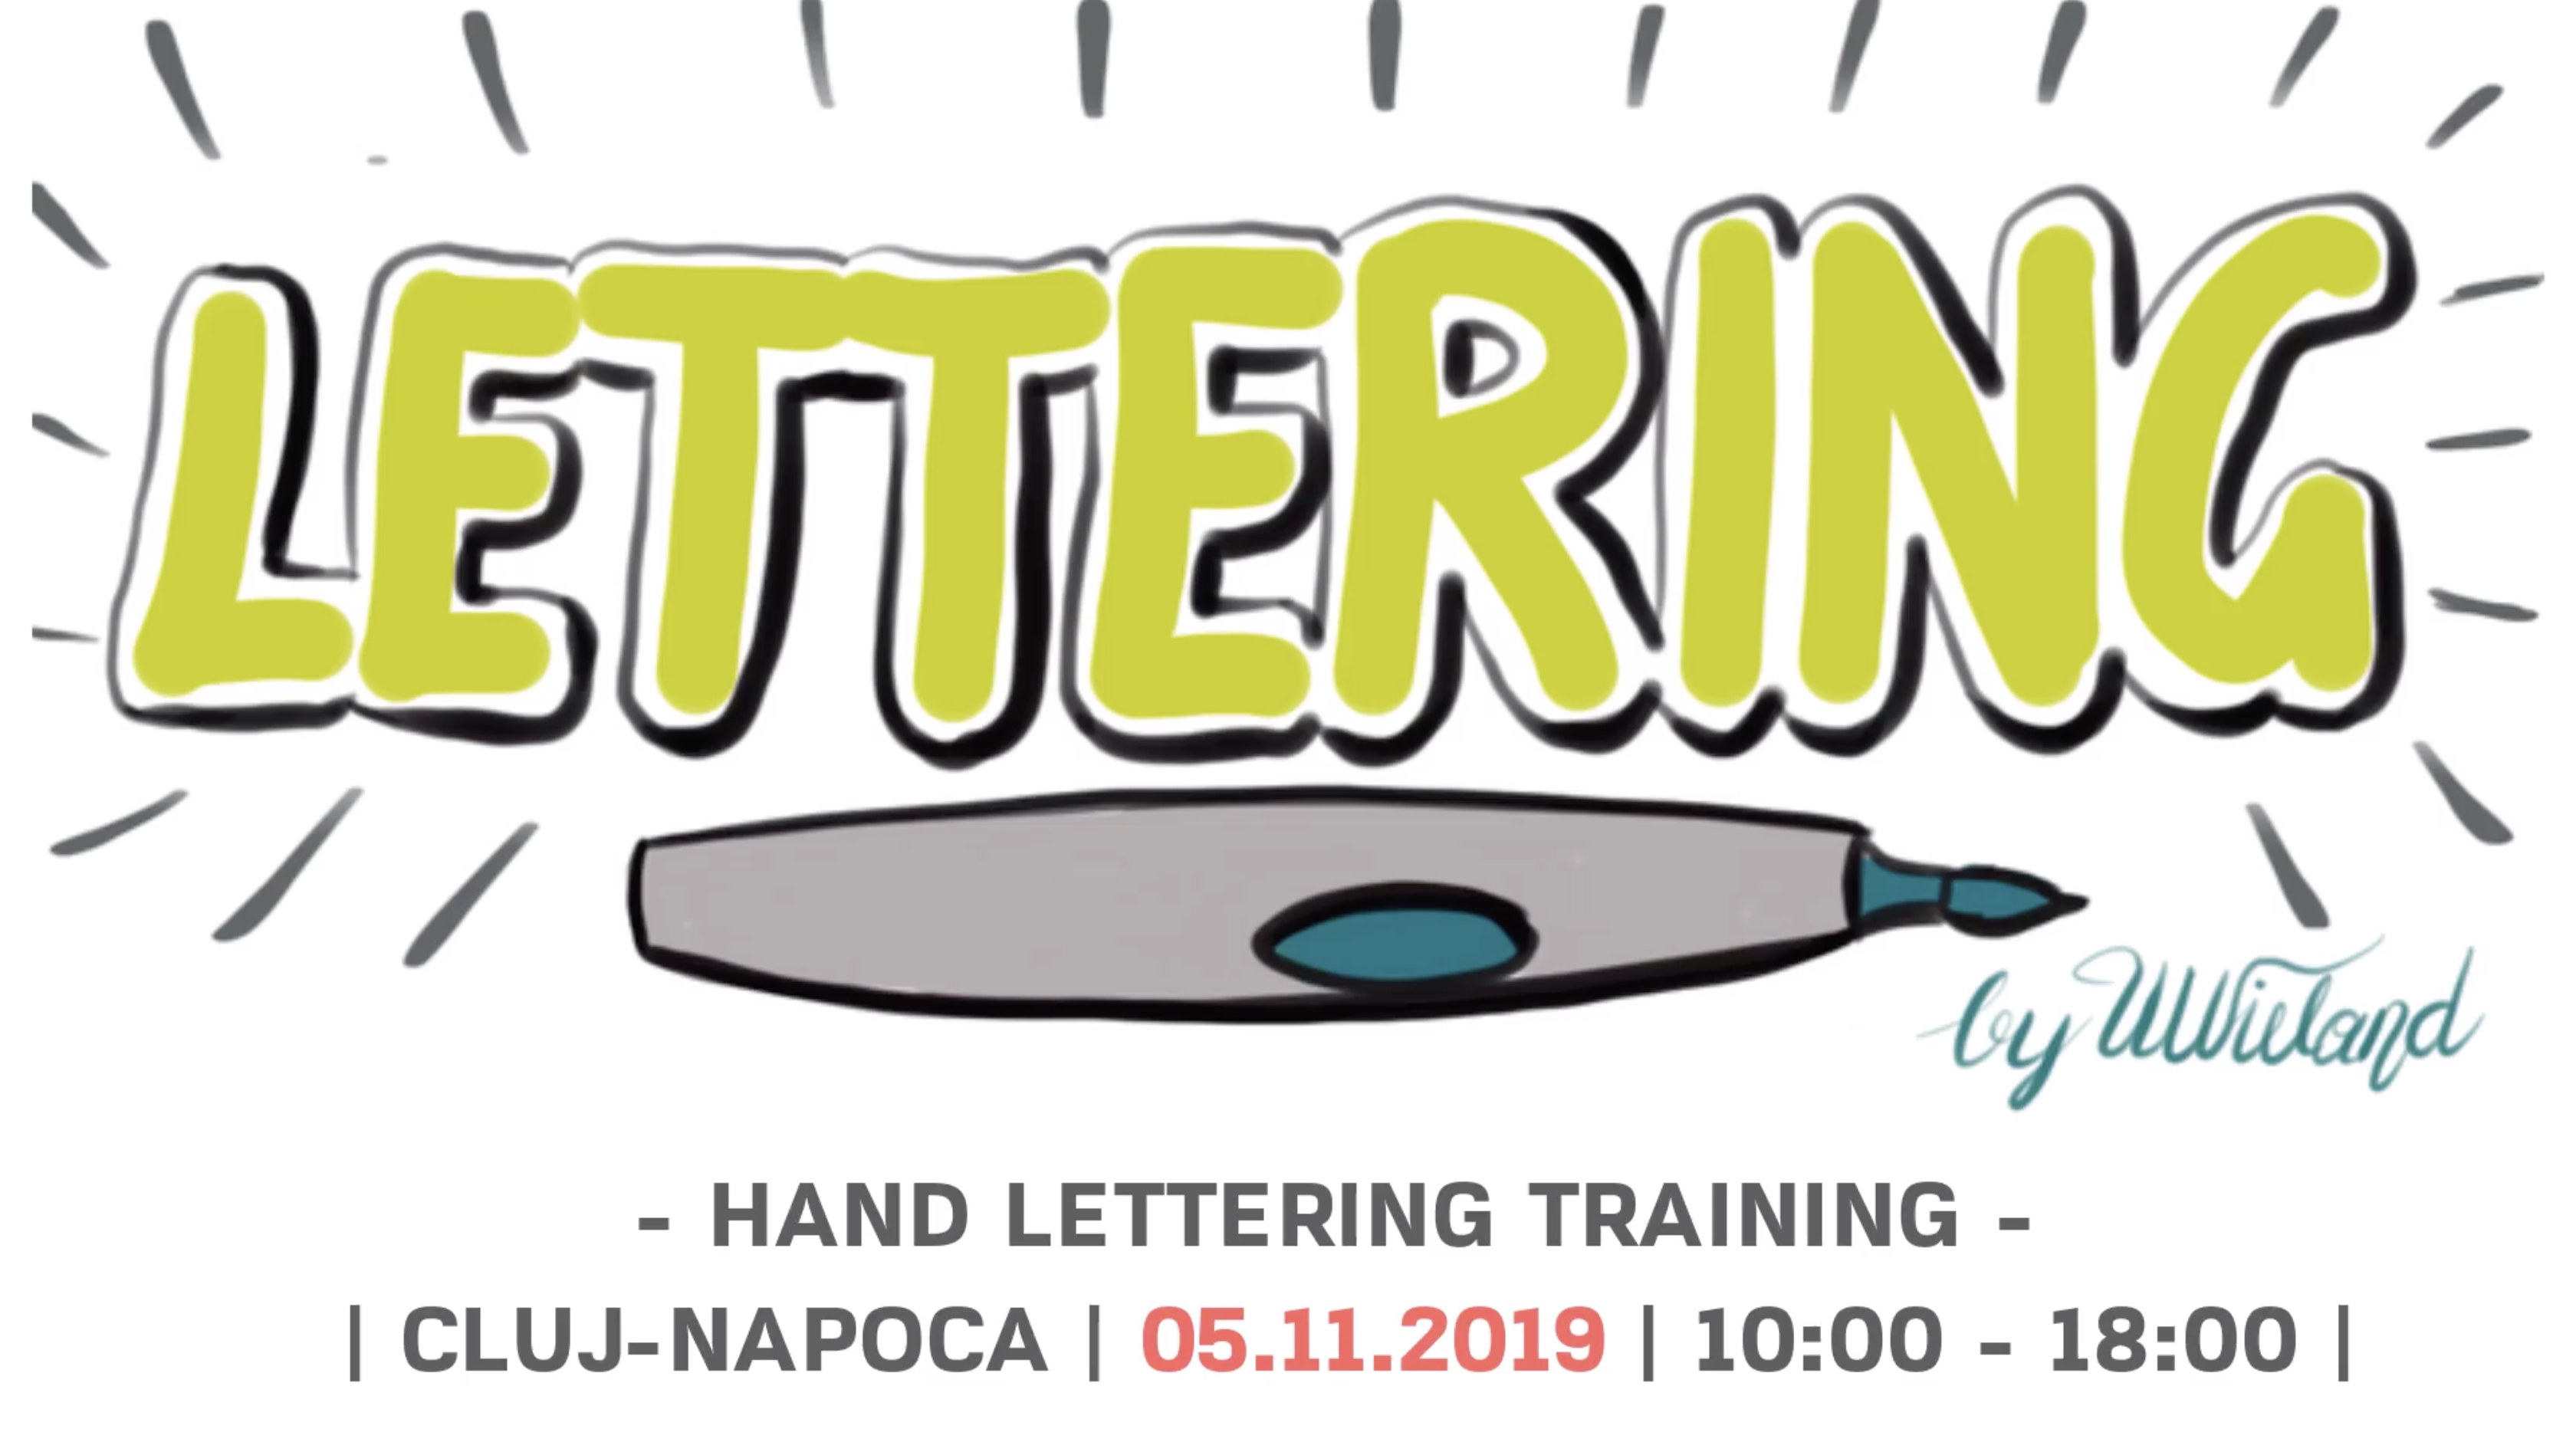 Hand Lettering Trainig